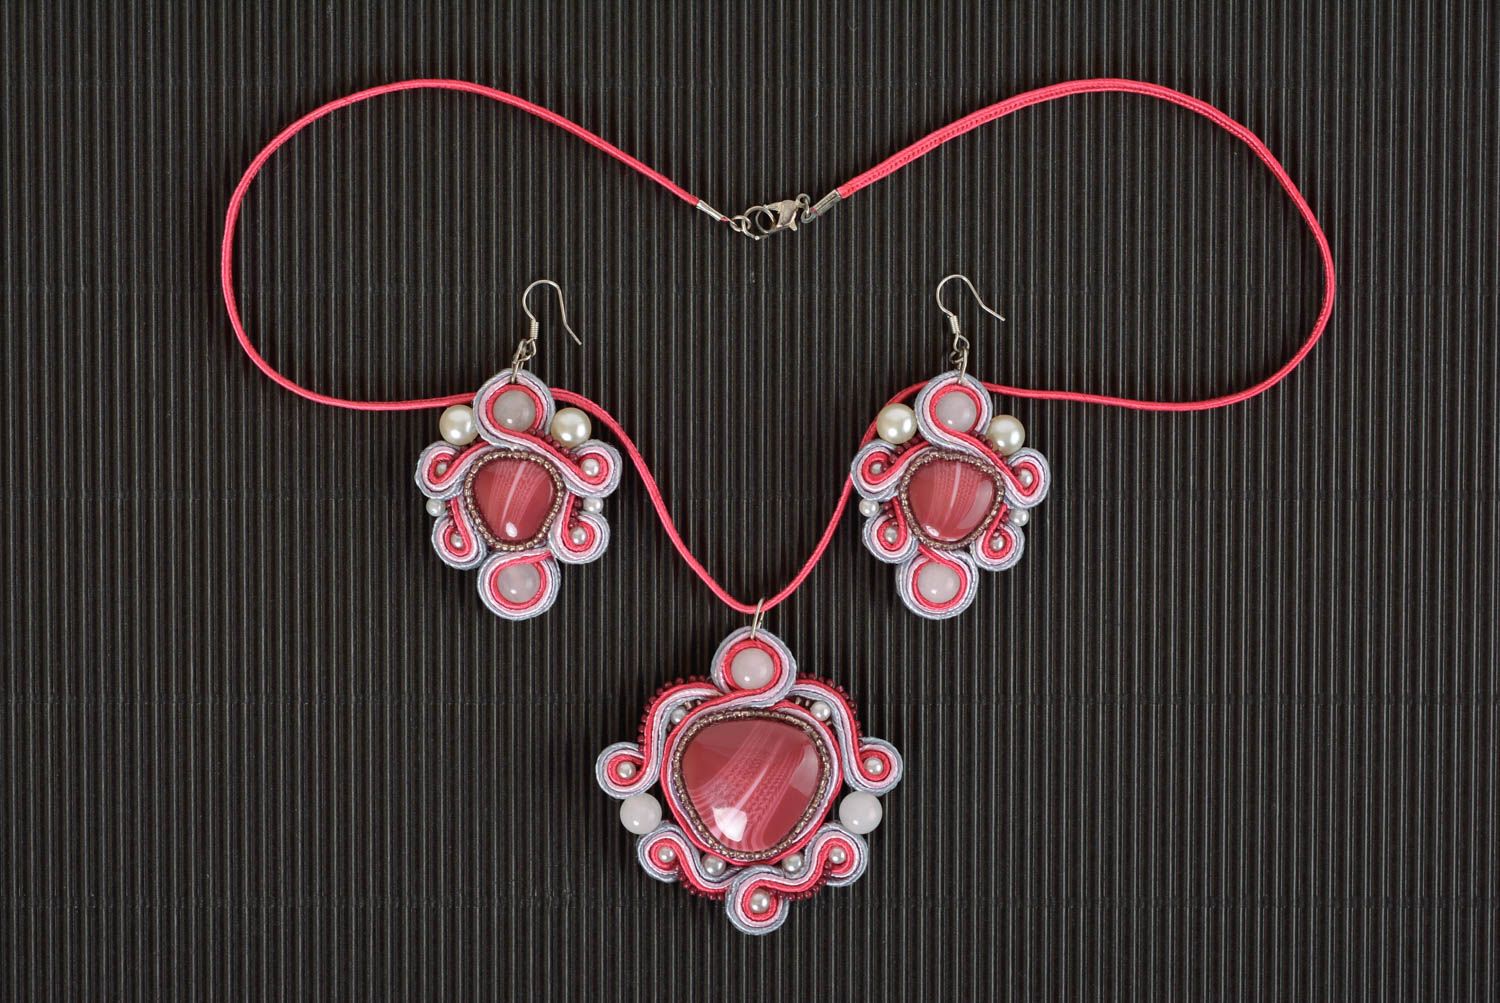 Handmade soutache jewelry soutache pendant and earrings designer accessories photo 1